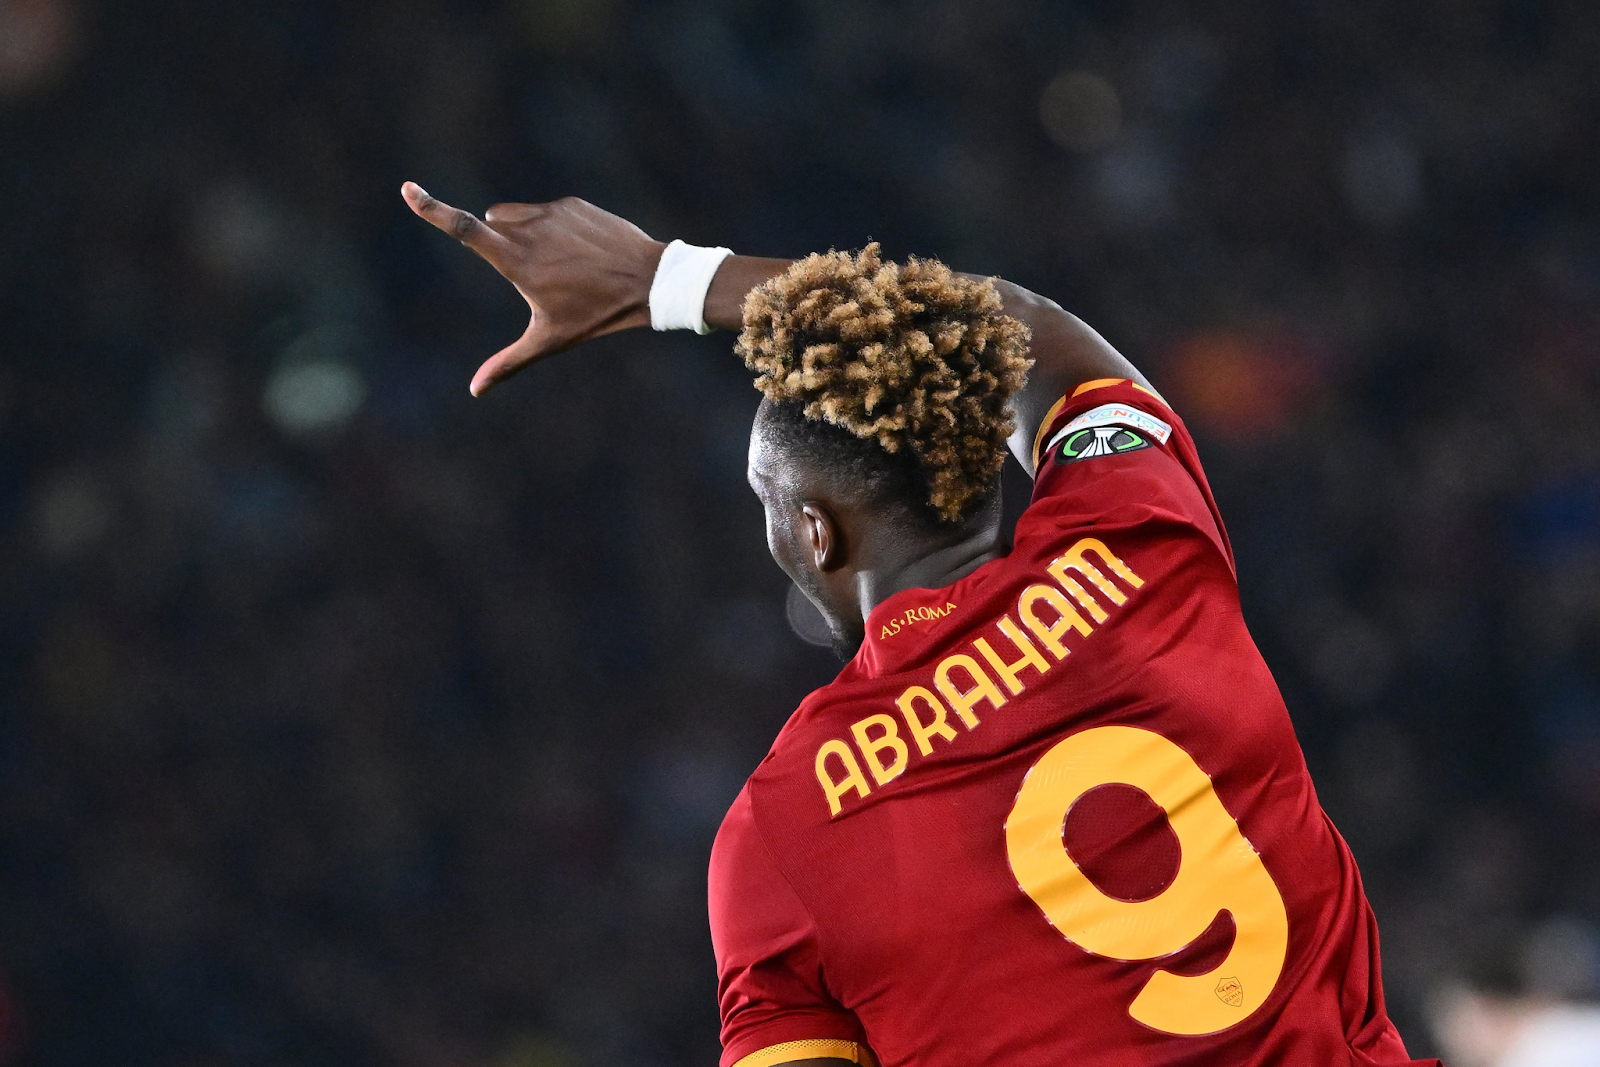 Abraham netted a brace breaking Batistuta & Montella’s record of 21 goals in their debut Roma season